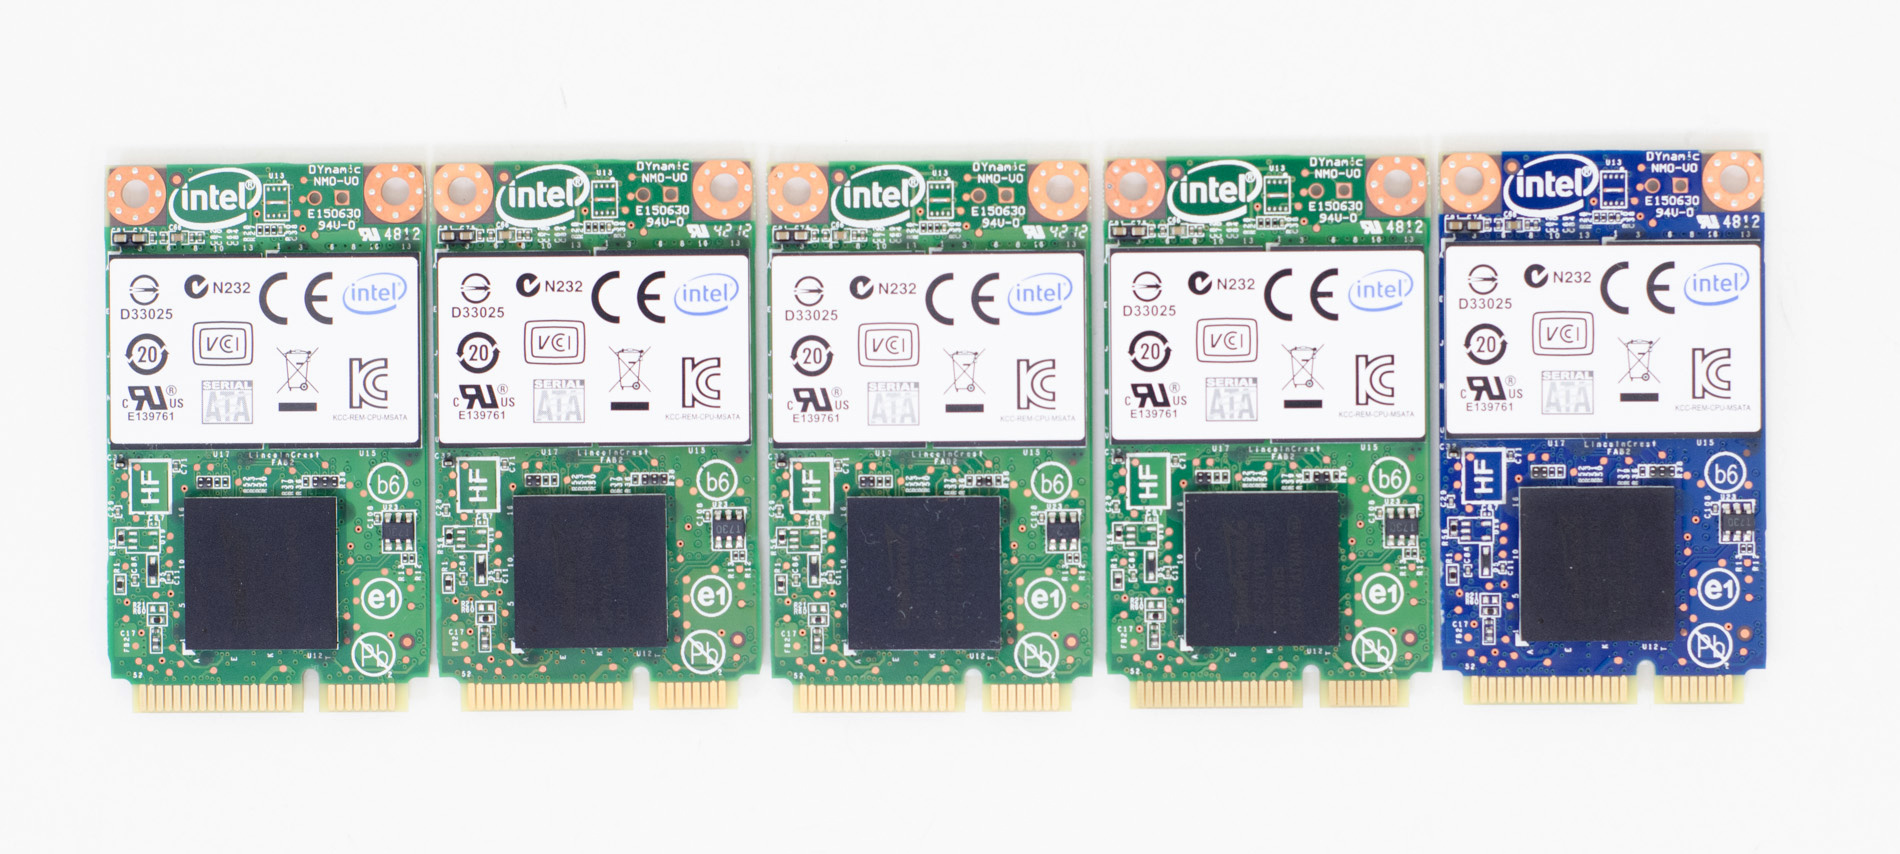 Måned Fristelse Træ The Full Intel SSD 525 Review: 30GB, 60GB, 120GB, 180GB & 240GB Tested